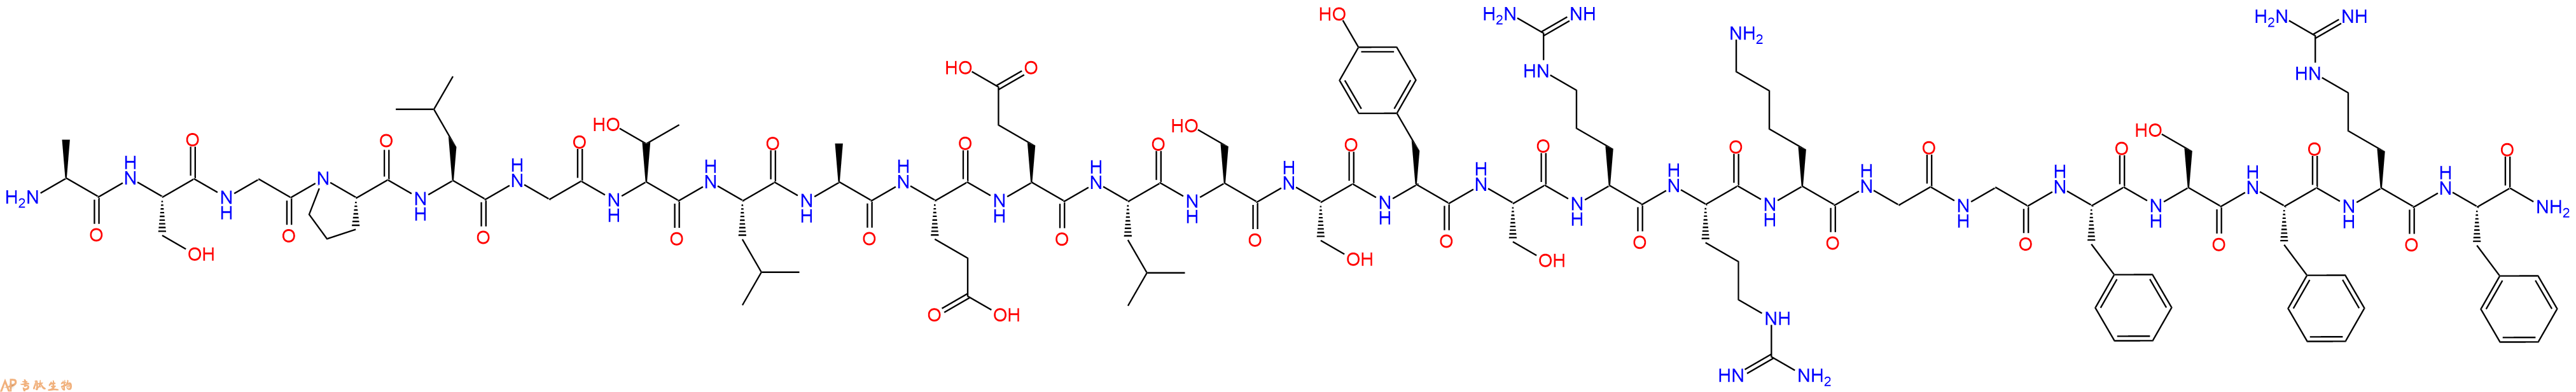 专肽生物产品Orphan GPCR SP9155 agonist P550 (mouse, rat)600171-70-8